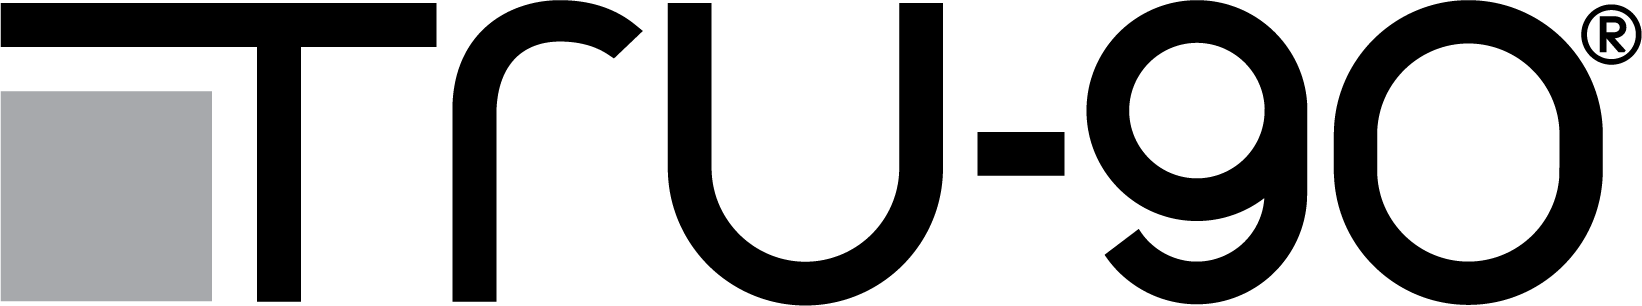 Tru-90 logo